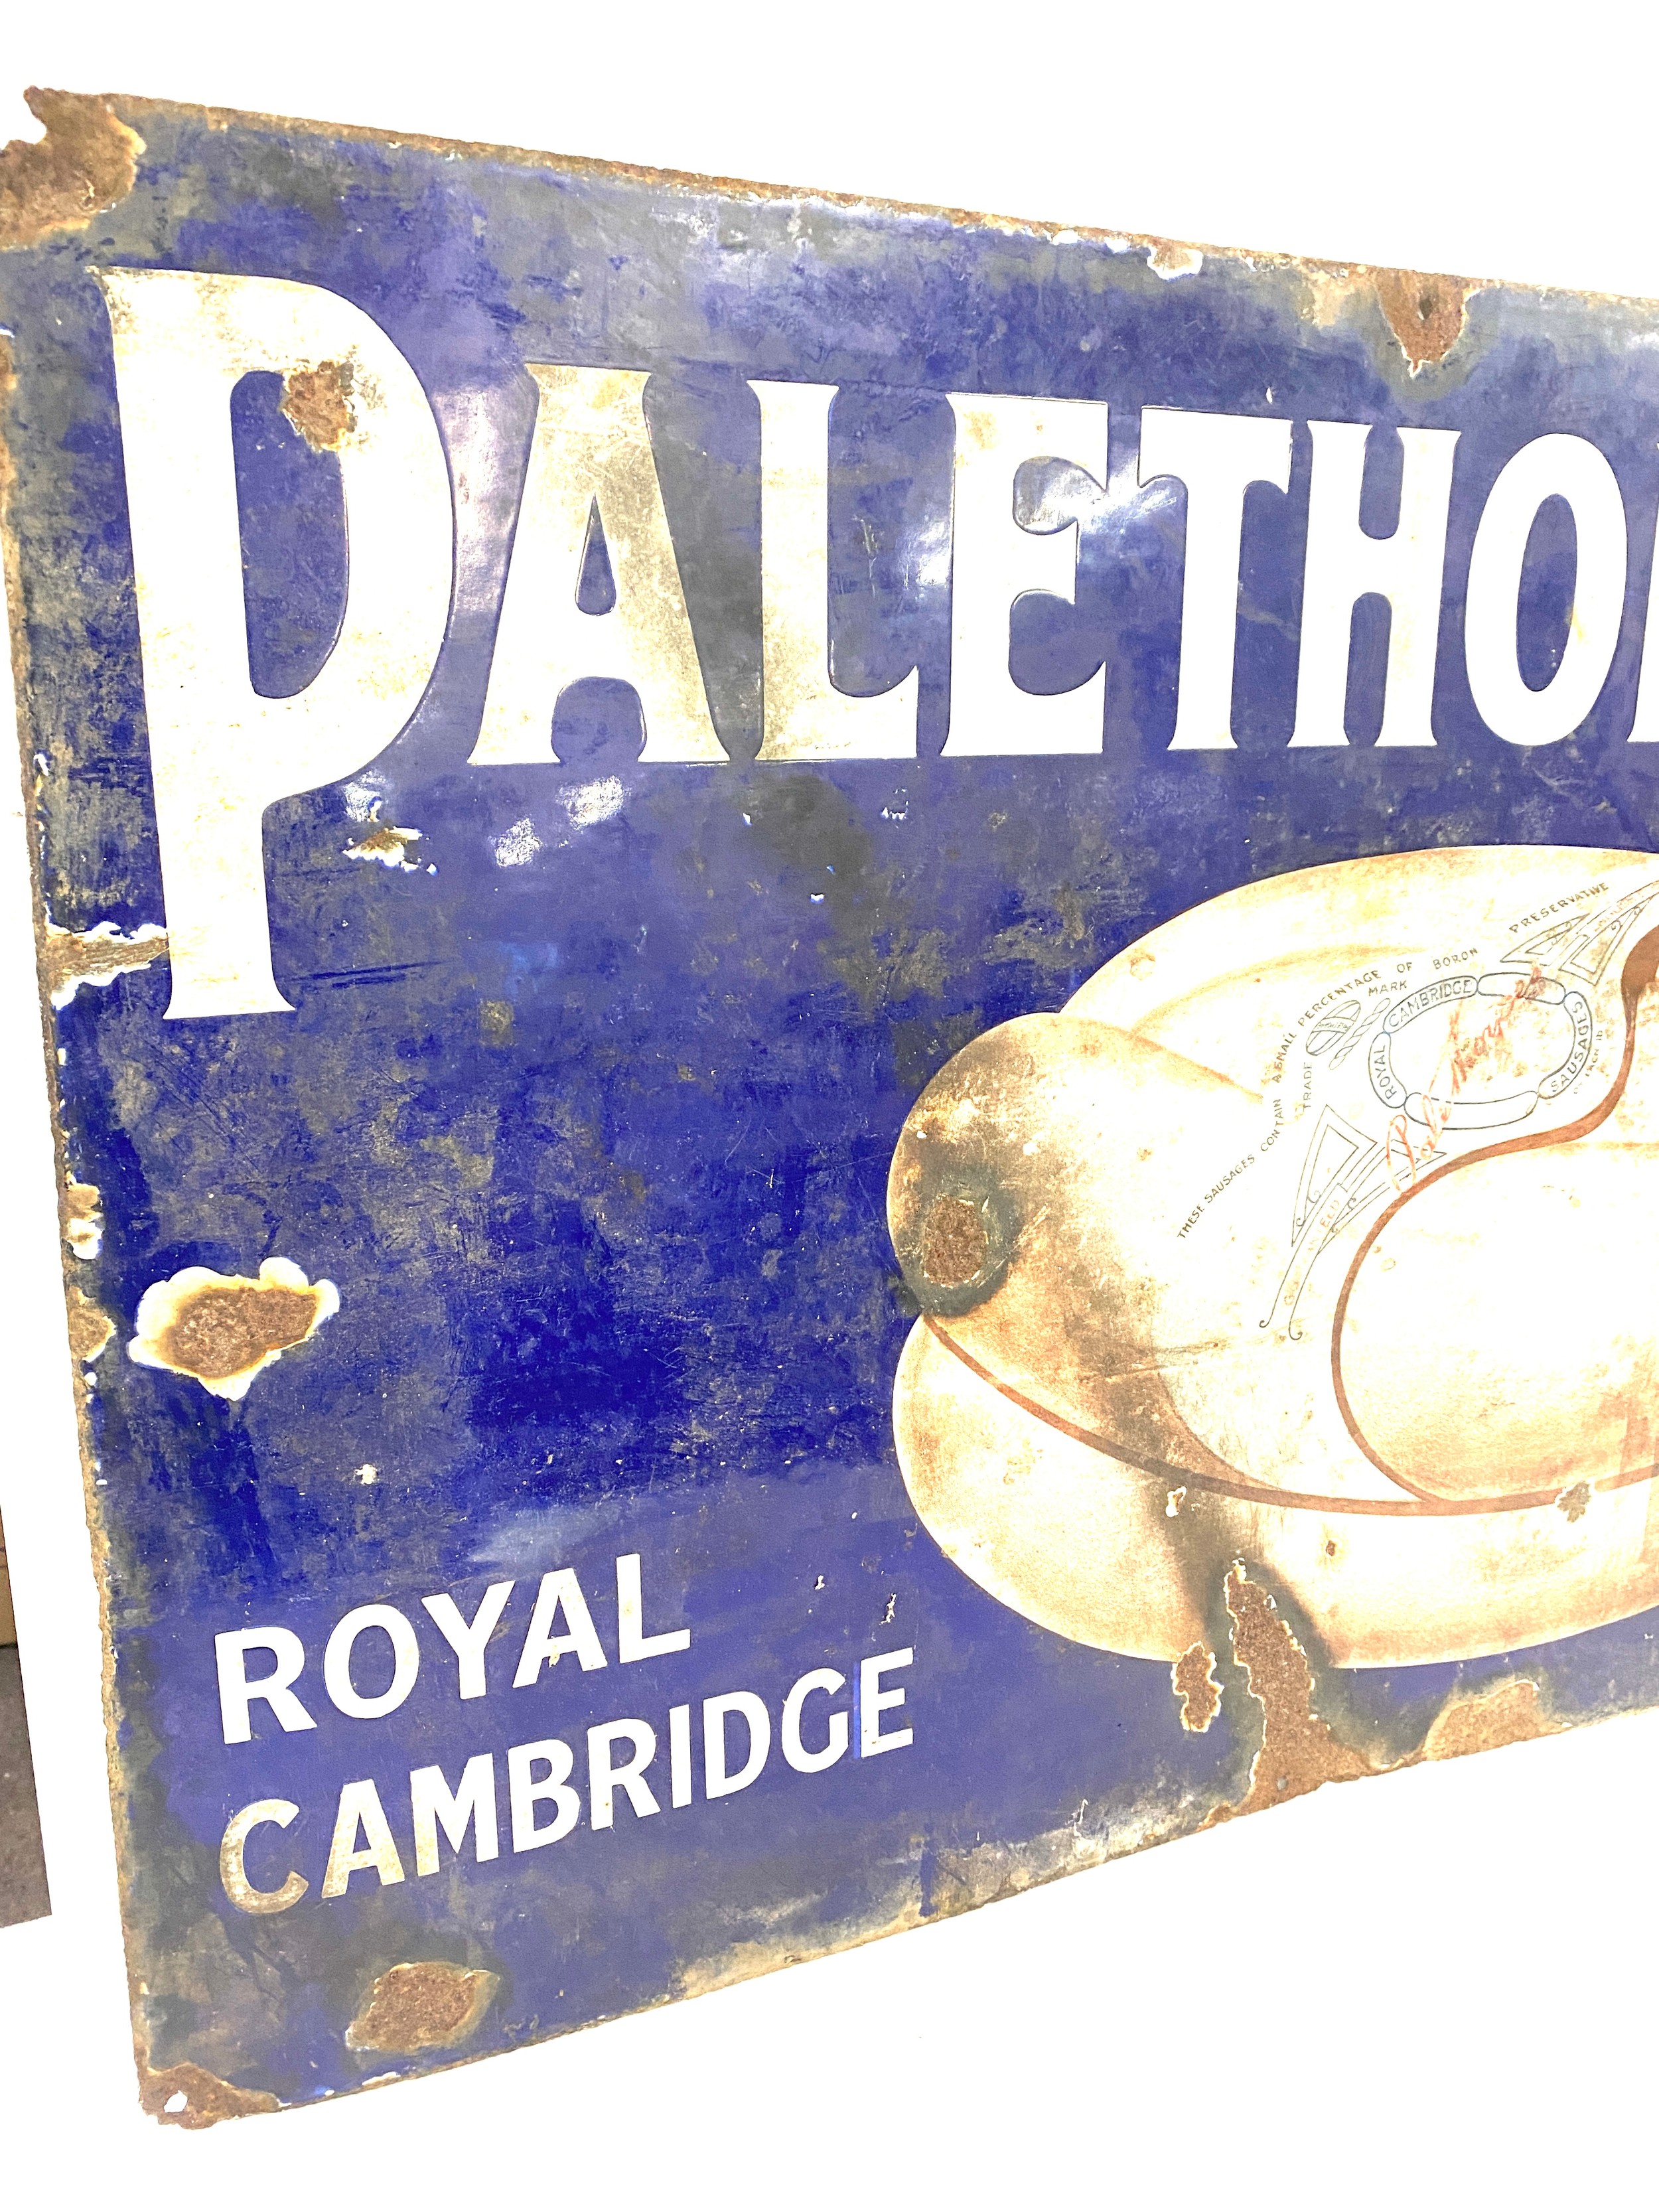 Vintage Palethorpes Royal Cambridge sausage advertising metal sign measures approx 24" tall 36" - Image 3 of 3